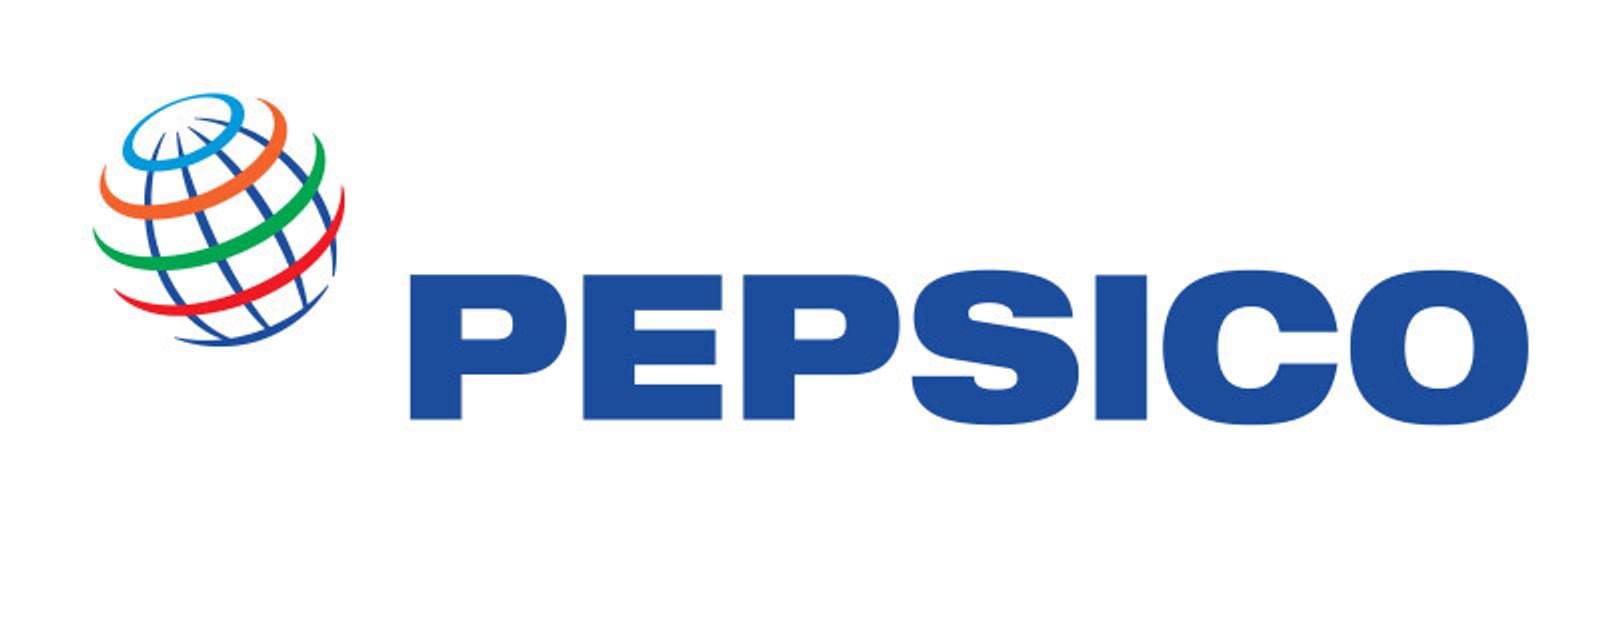 Pepsi Co Image